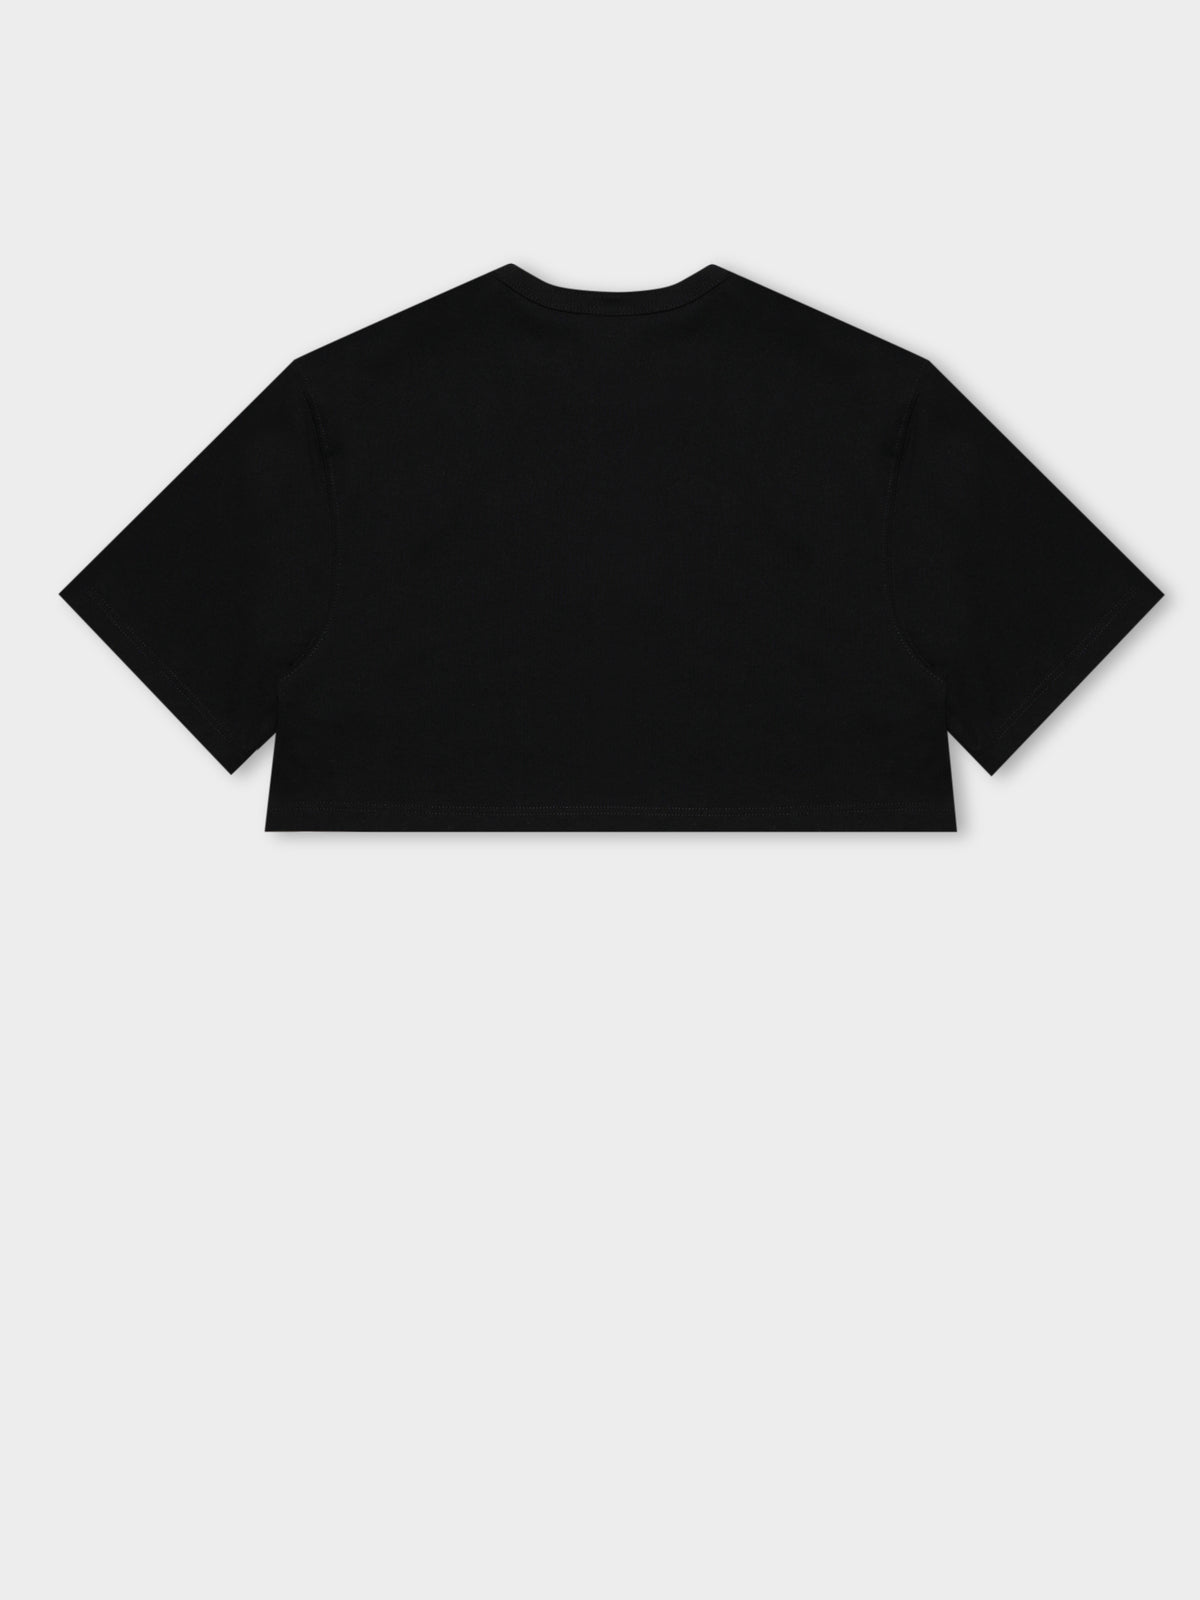 HT Tonal Crop T-Shirt in Black